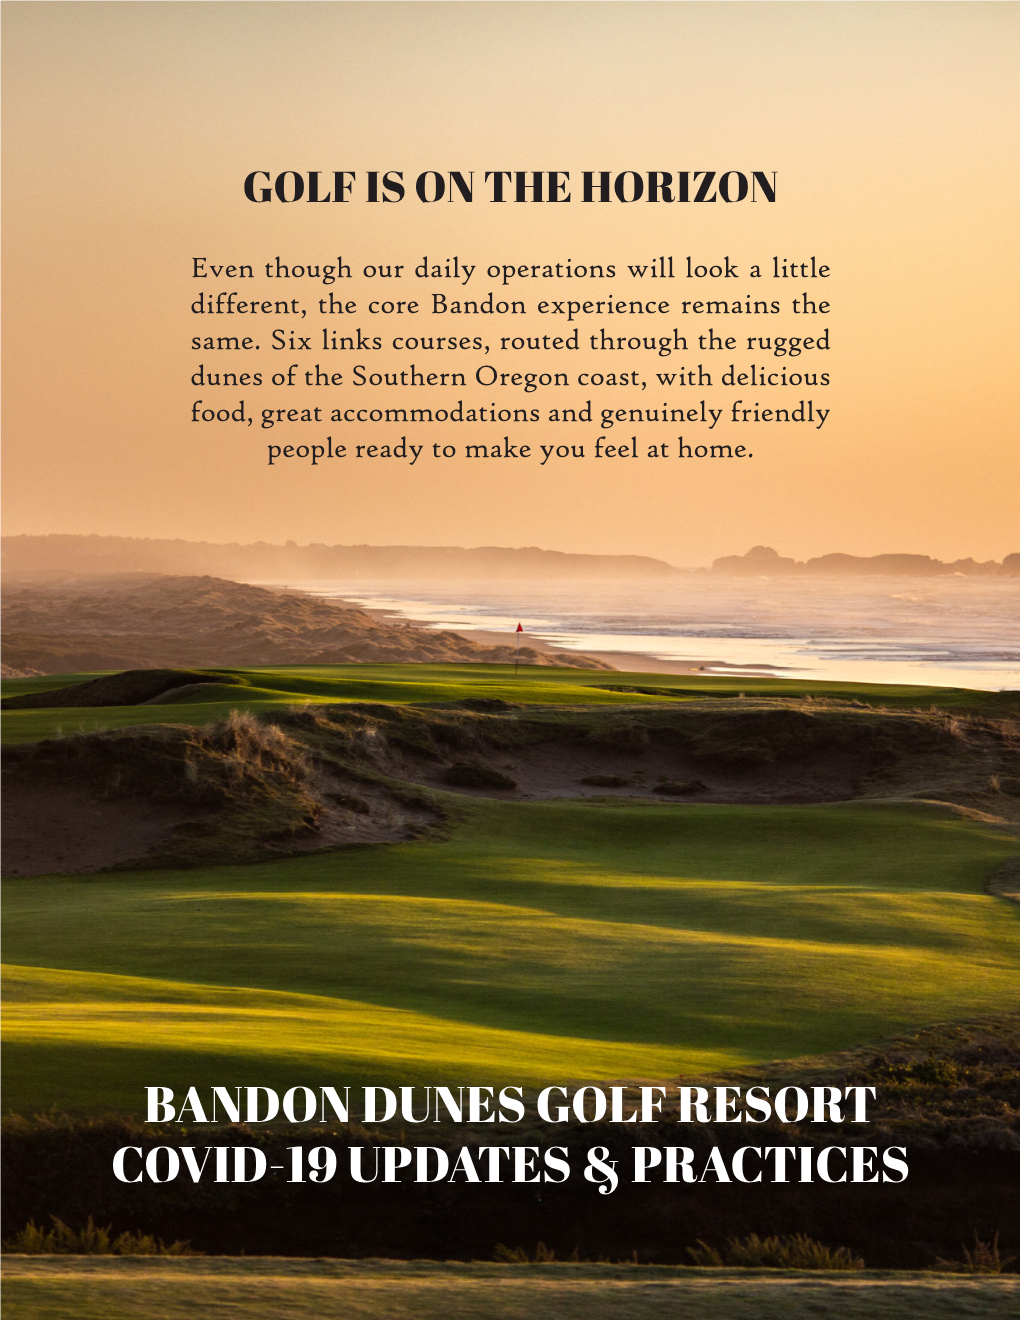 Bandon Dunes Golf Resort Covid-19 Updates & Practices